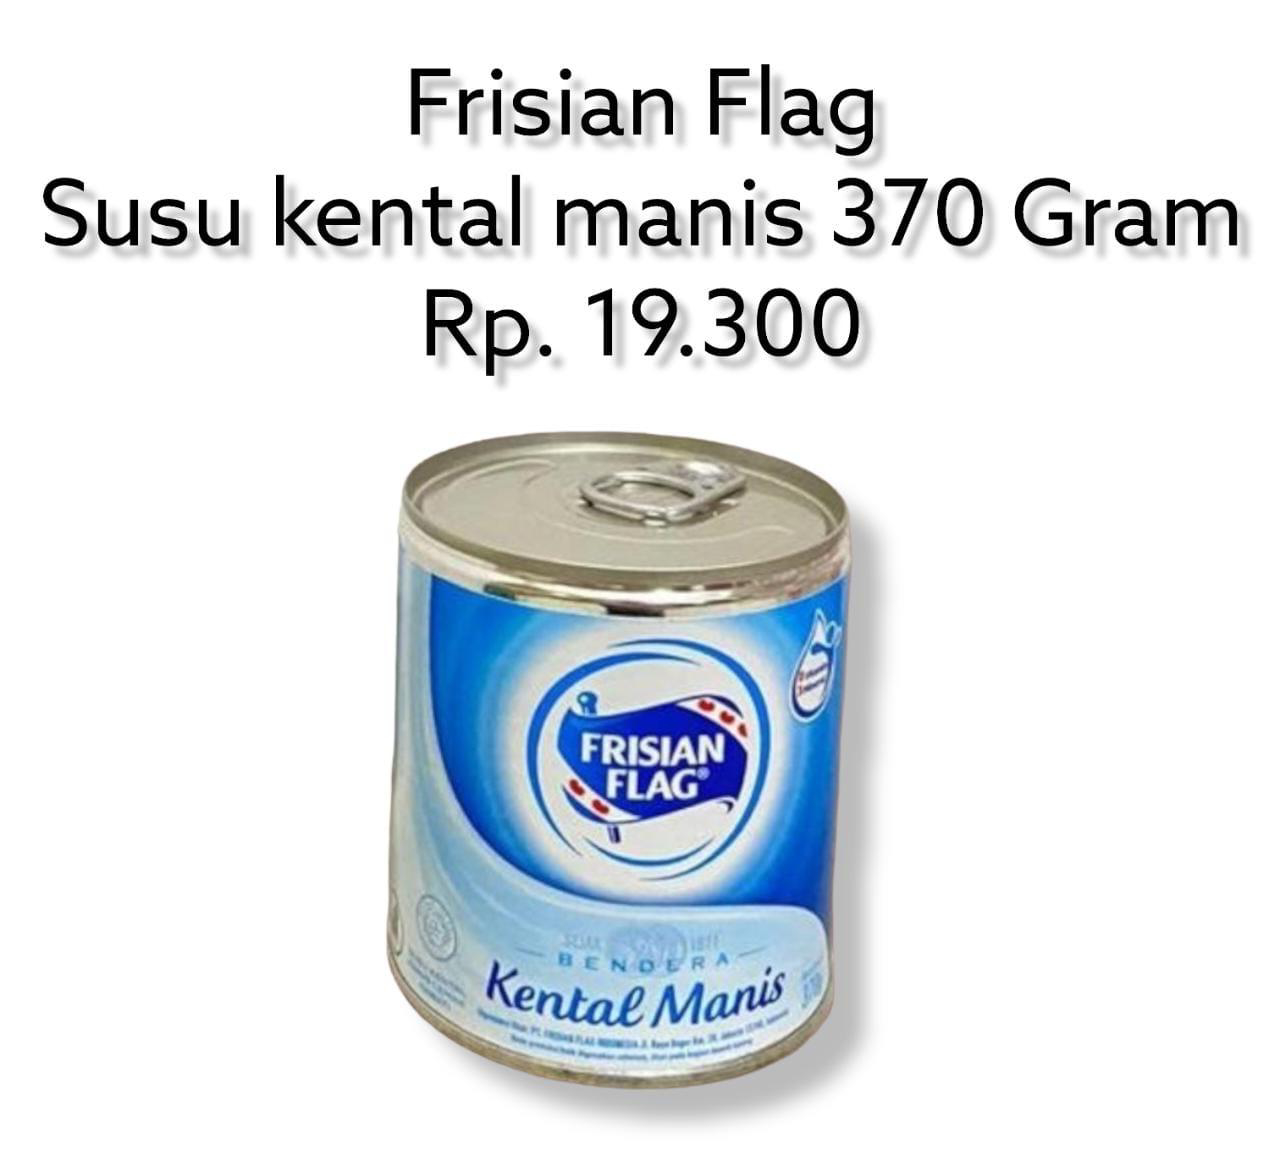 Frisian Flag (susu kental manis 370 gram)1